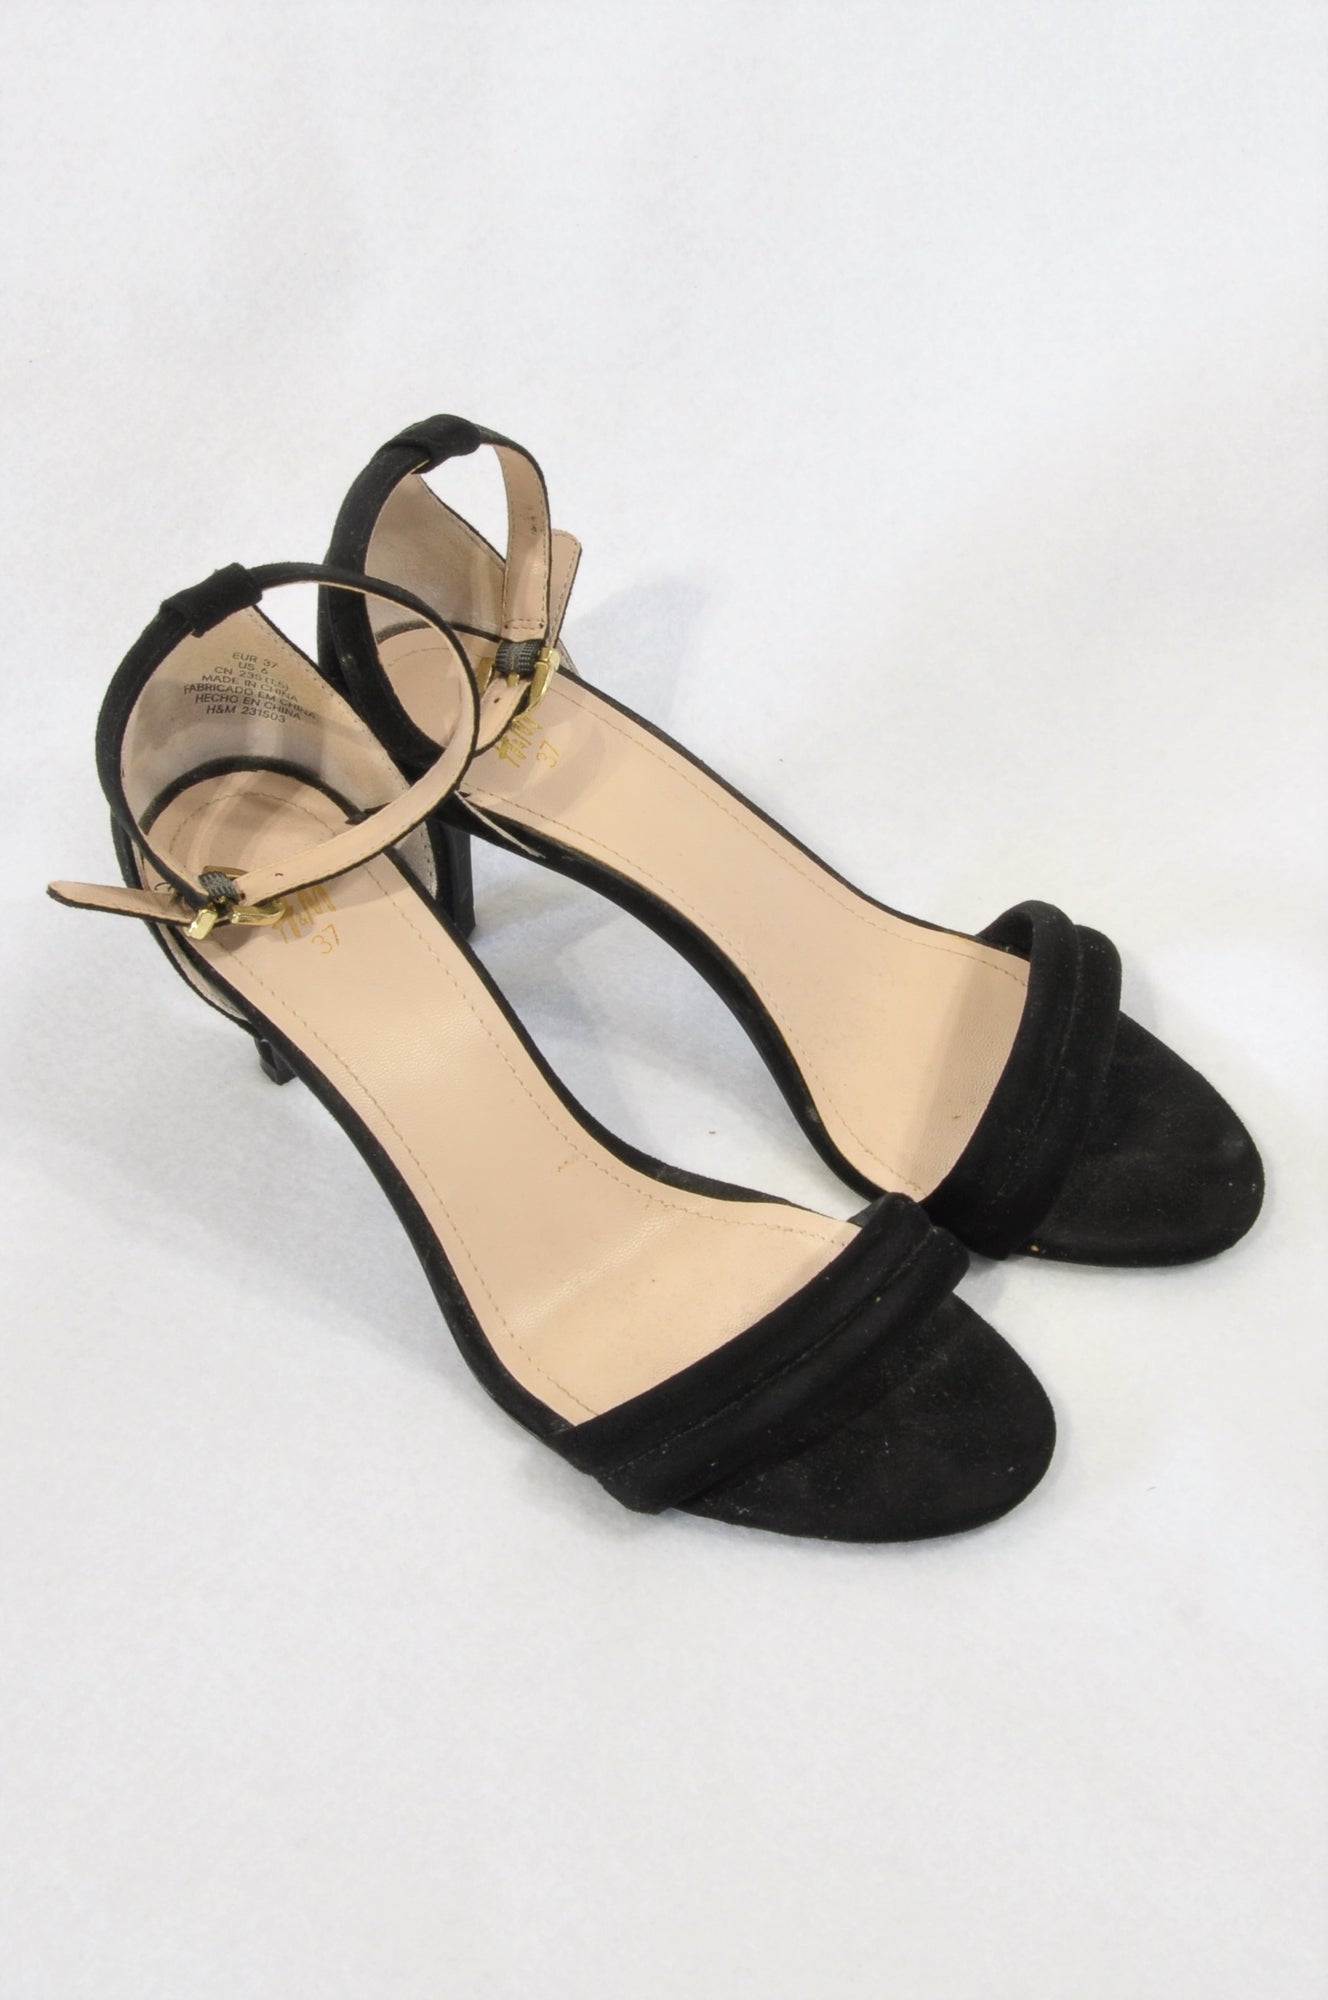 black heels size 4